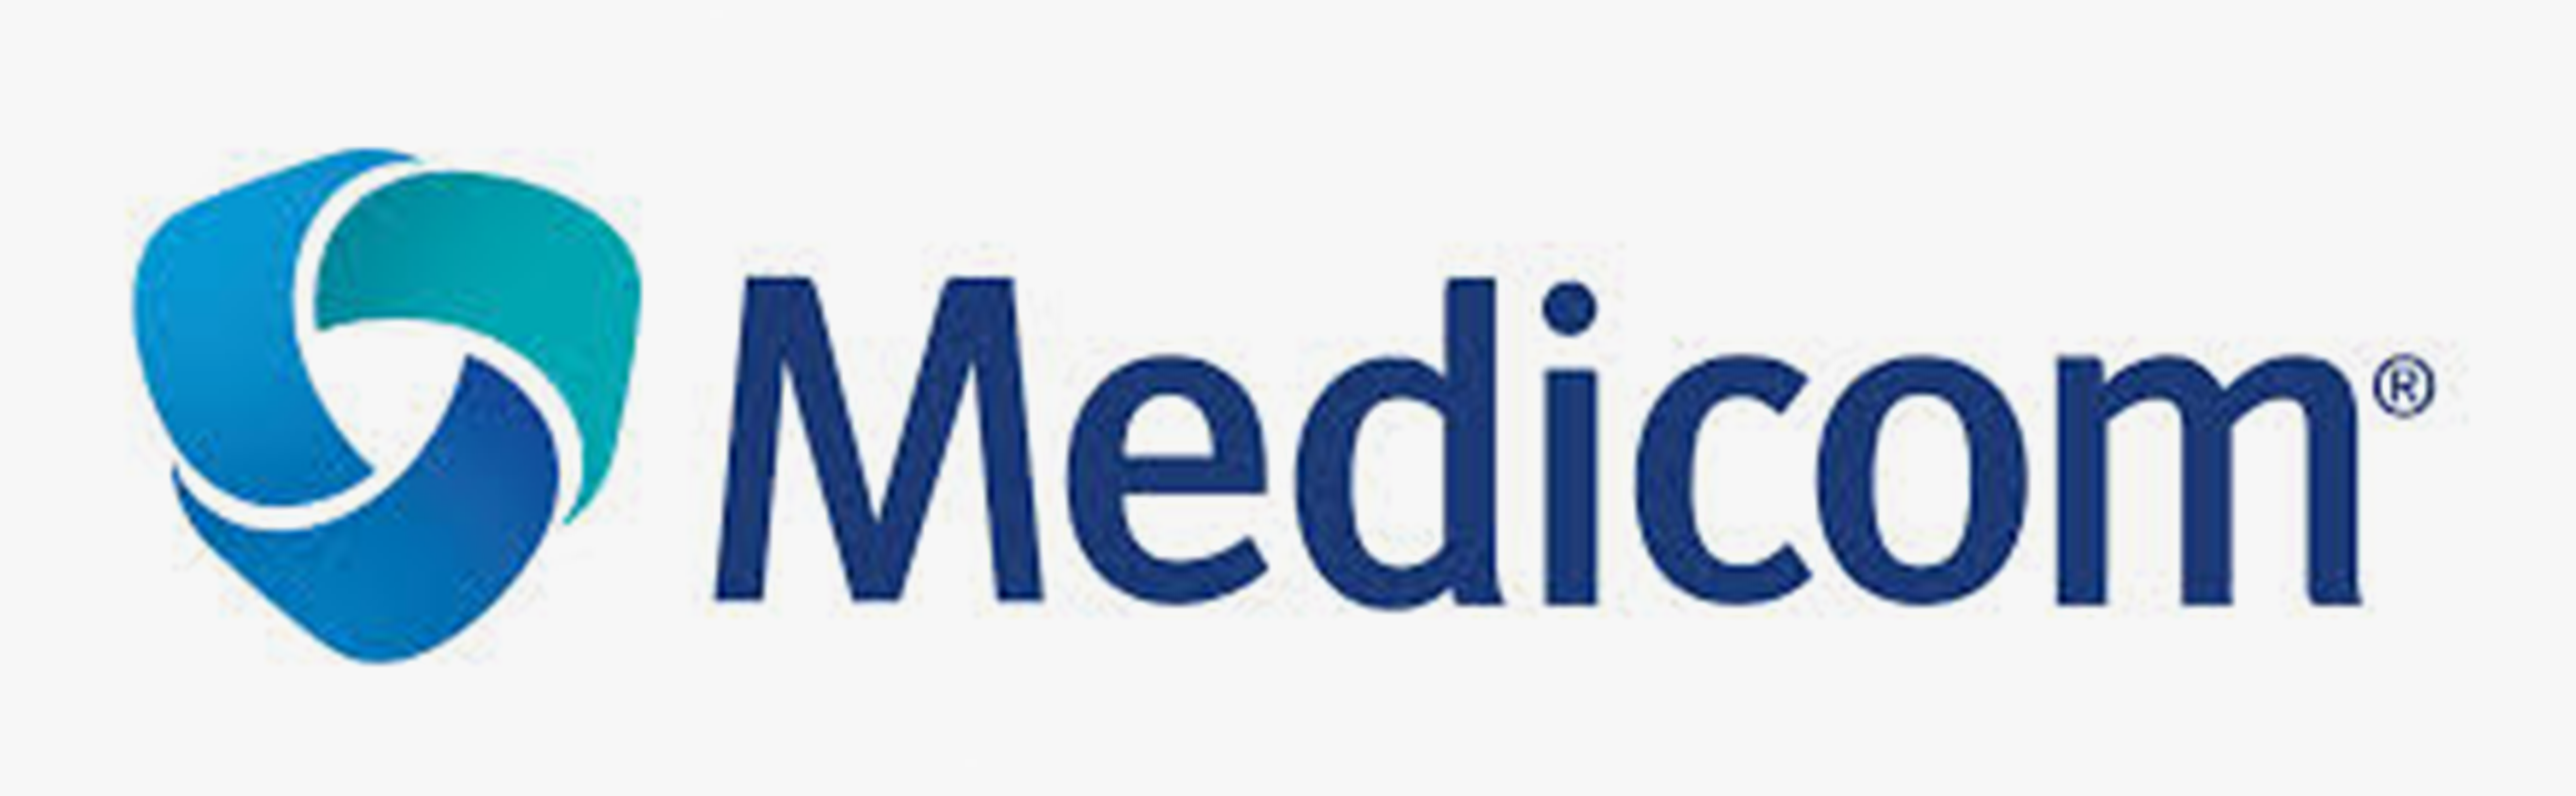 Medicom, Inc.